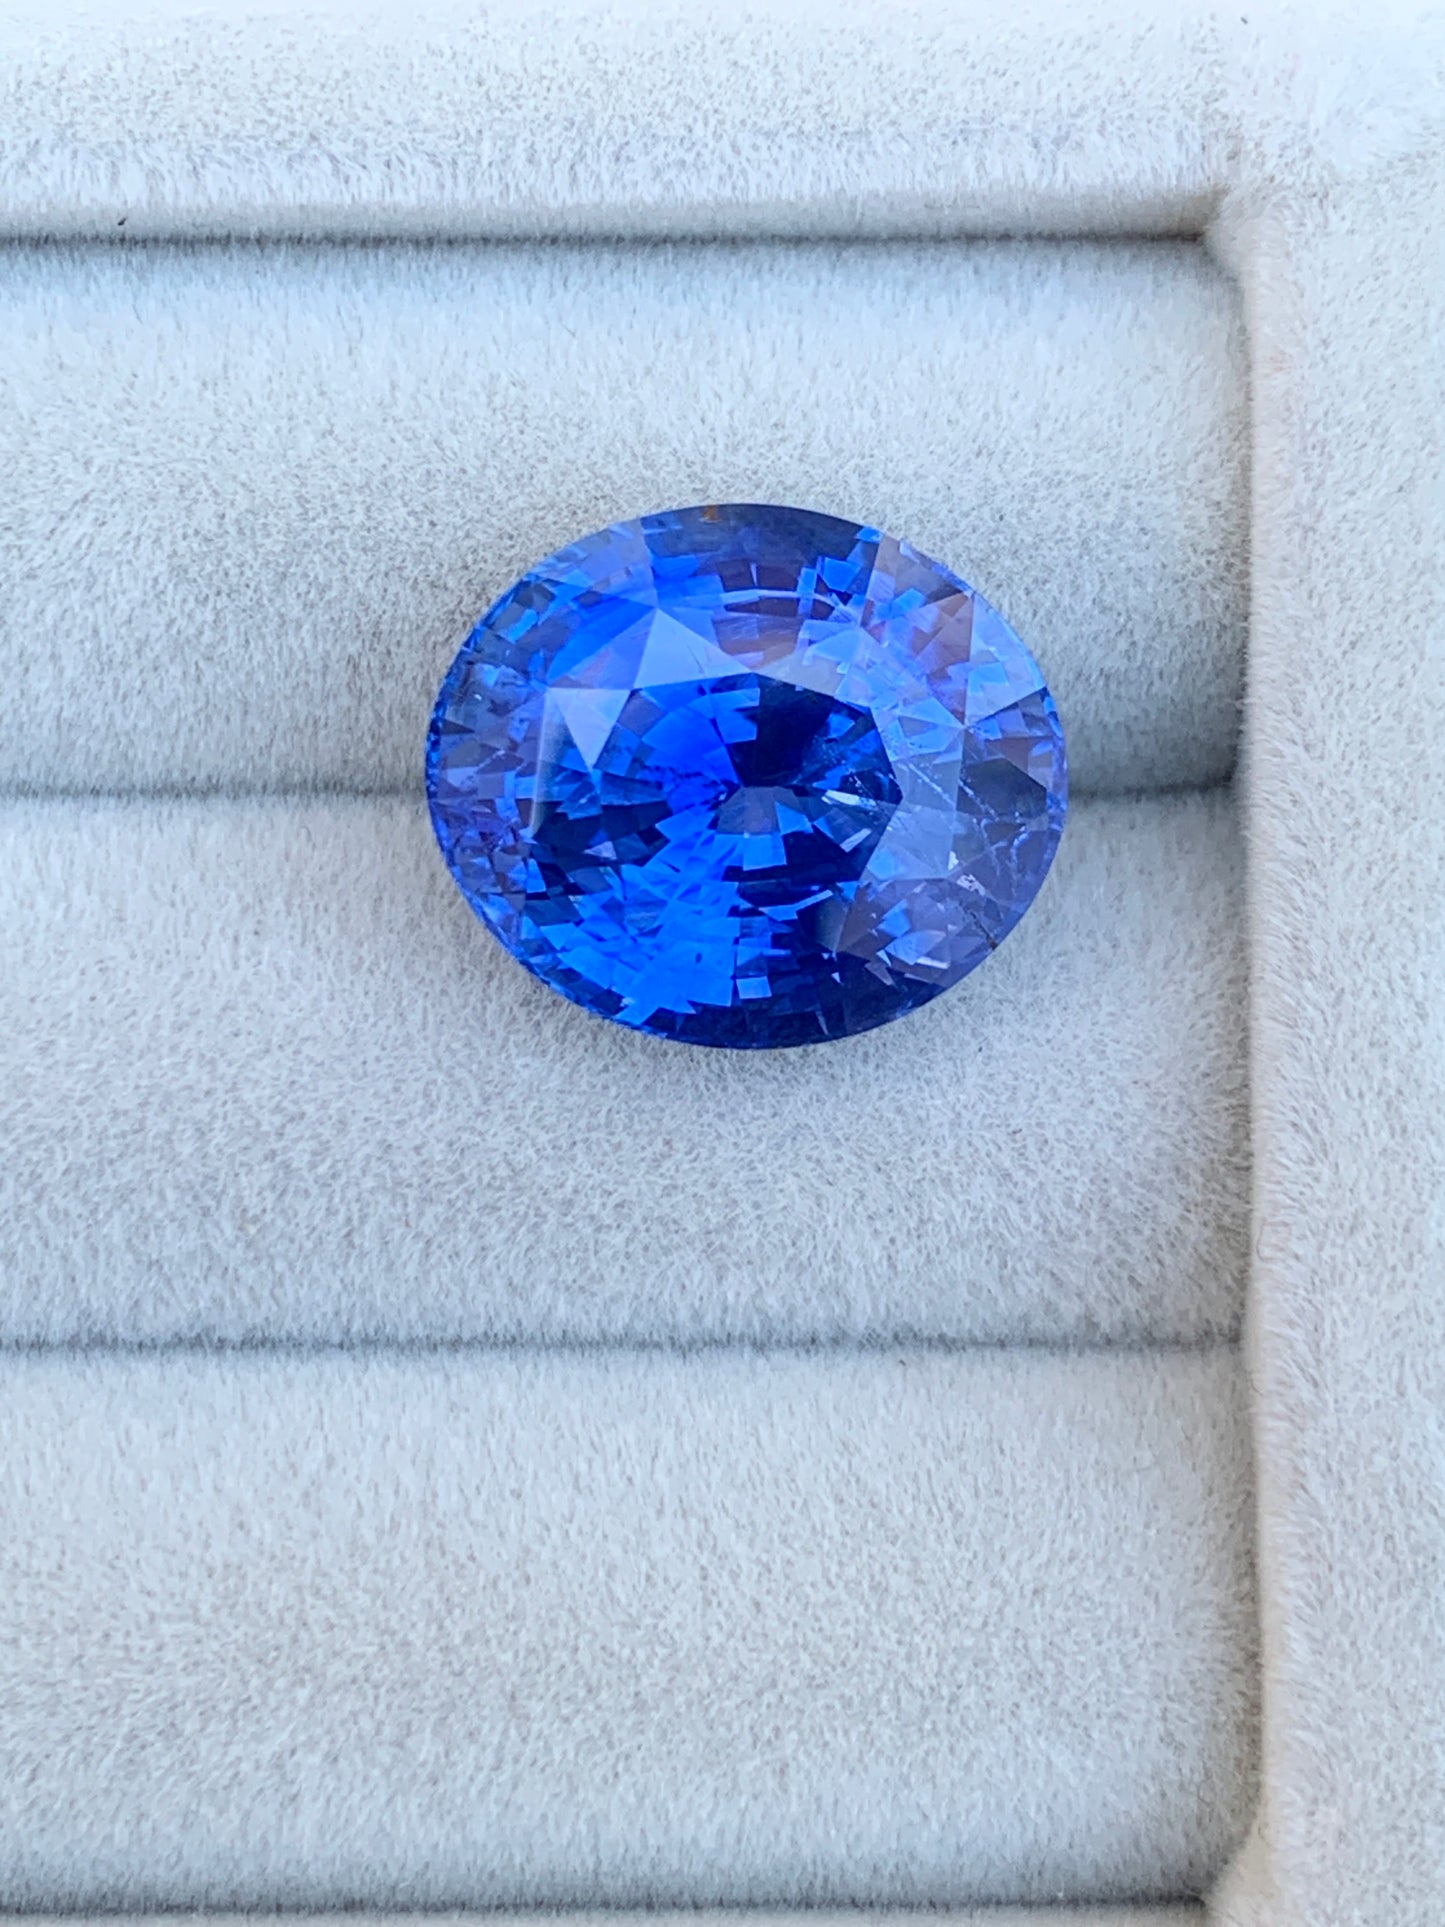 Saphir bleu du Sri Lanka taille ovale de 13,02ct